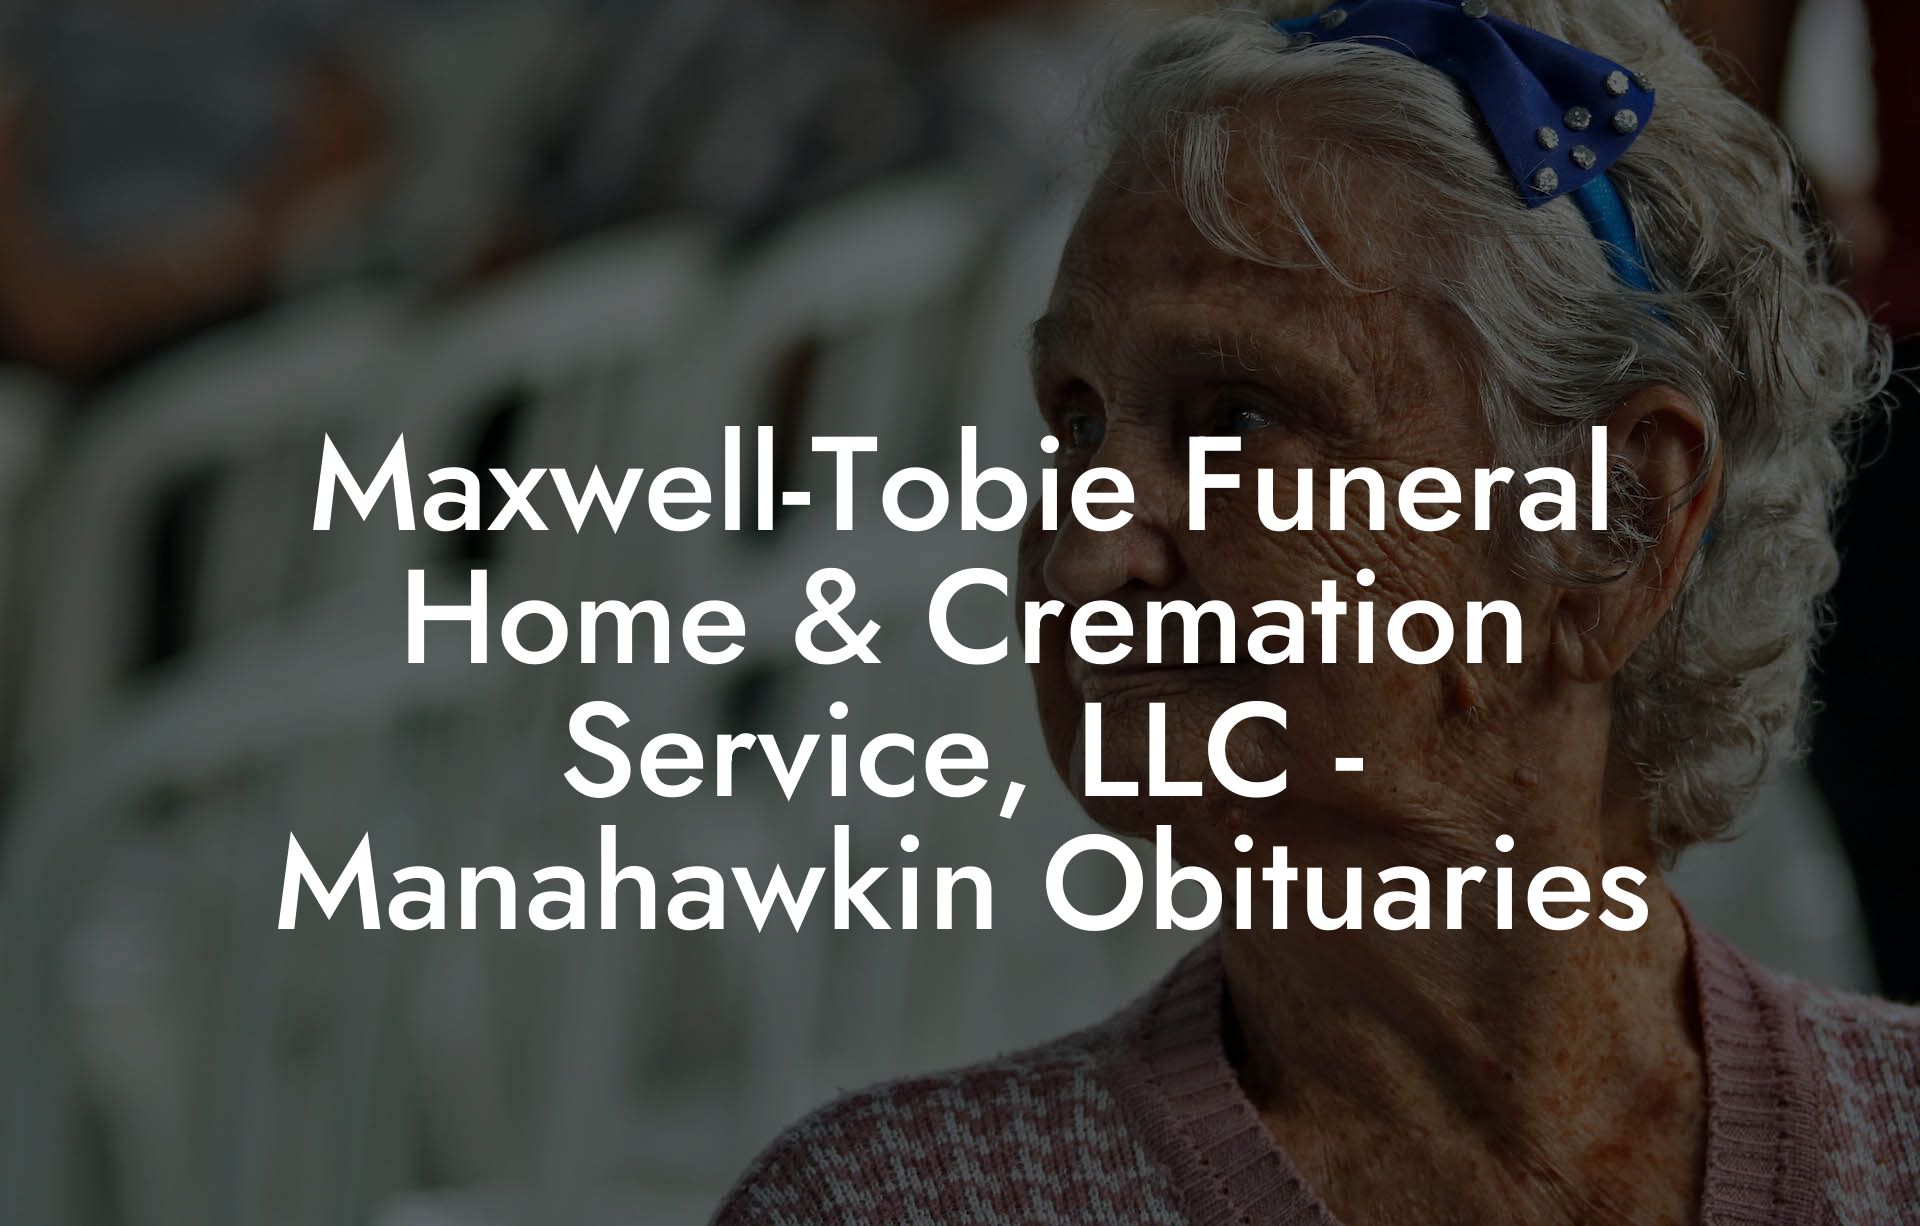 Maxwell-Tobie Funeral Home & Cremation Service, LLC - Manahawkin Obituaries